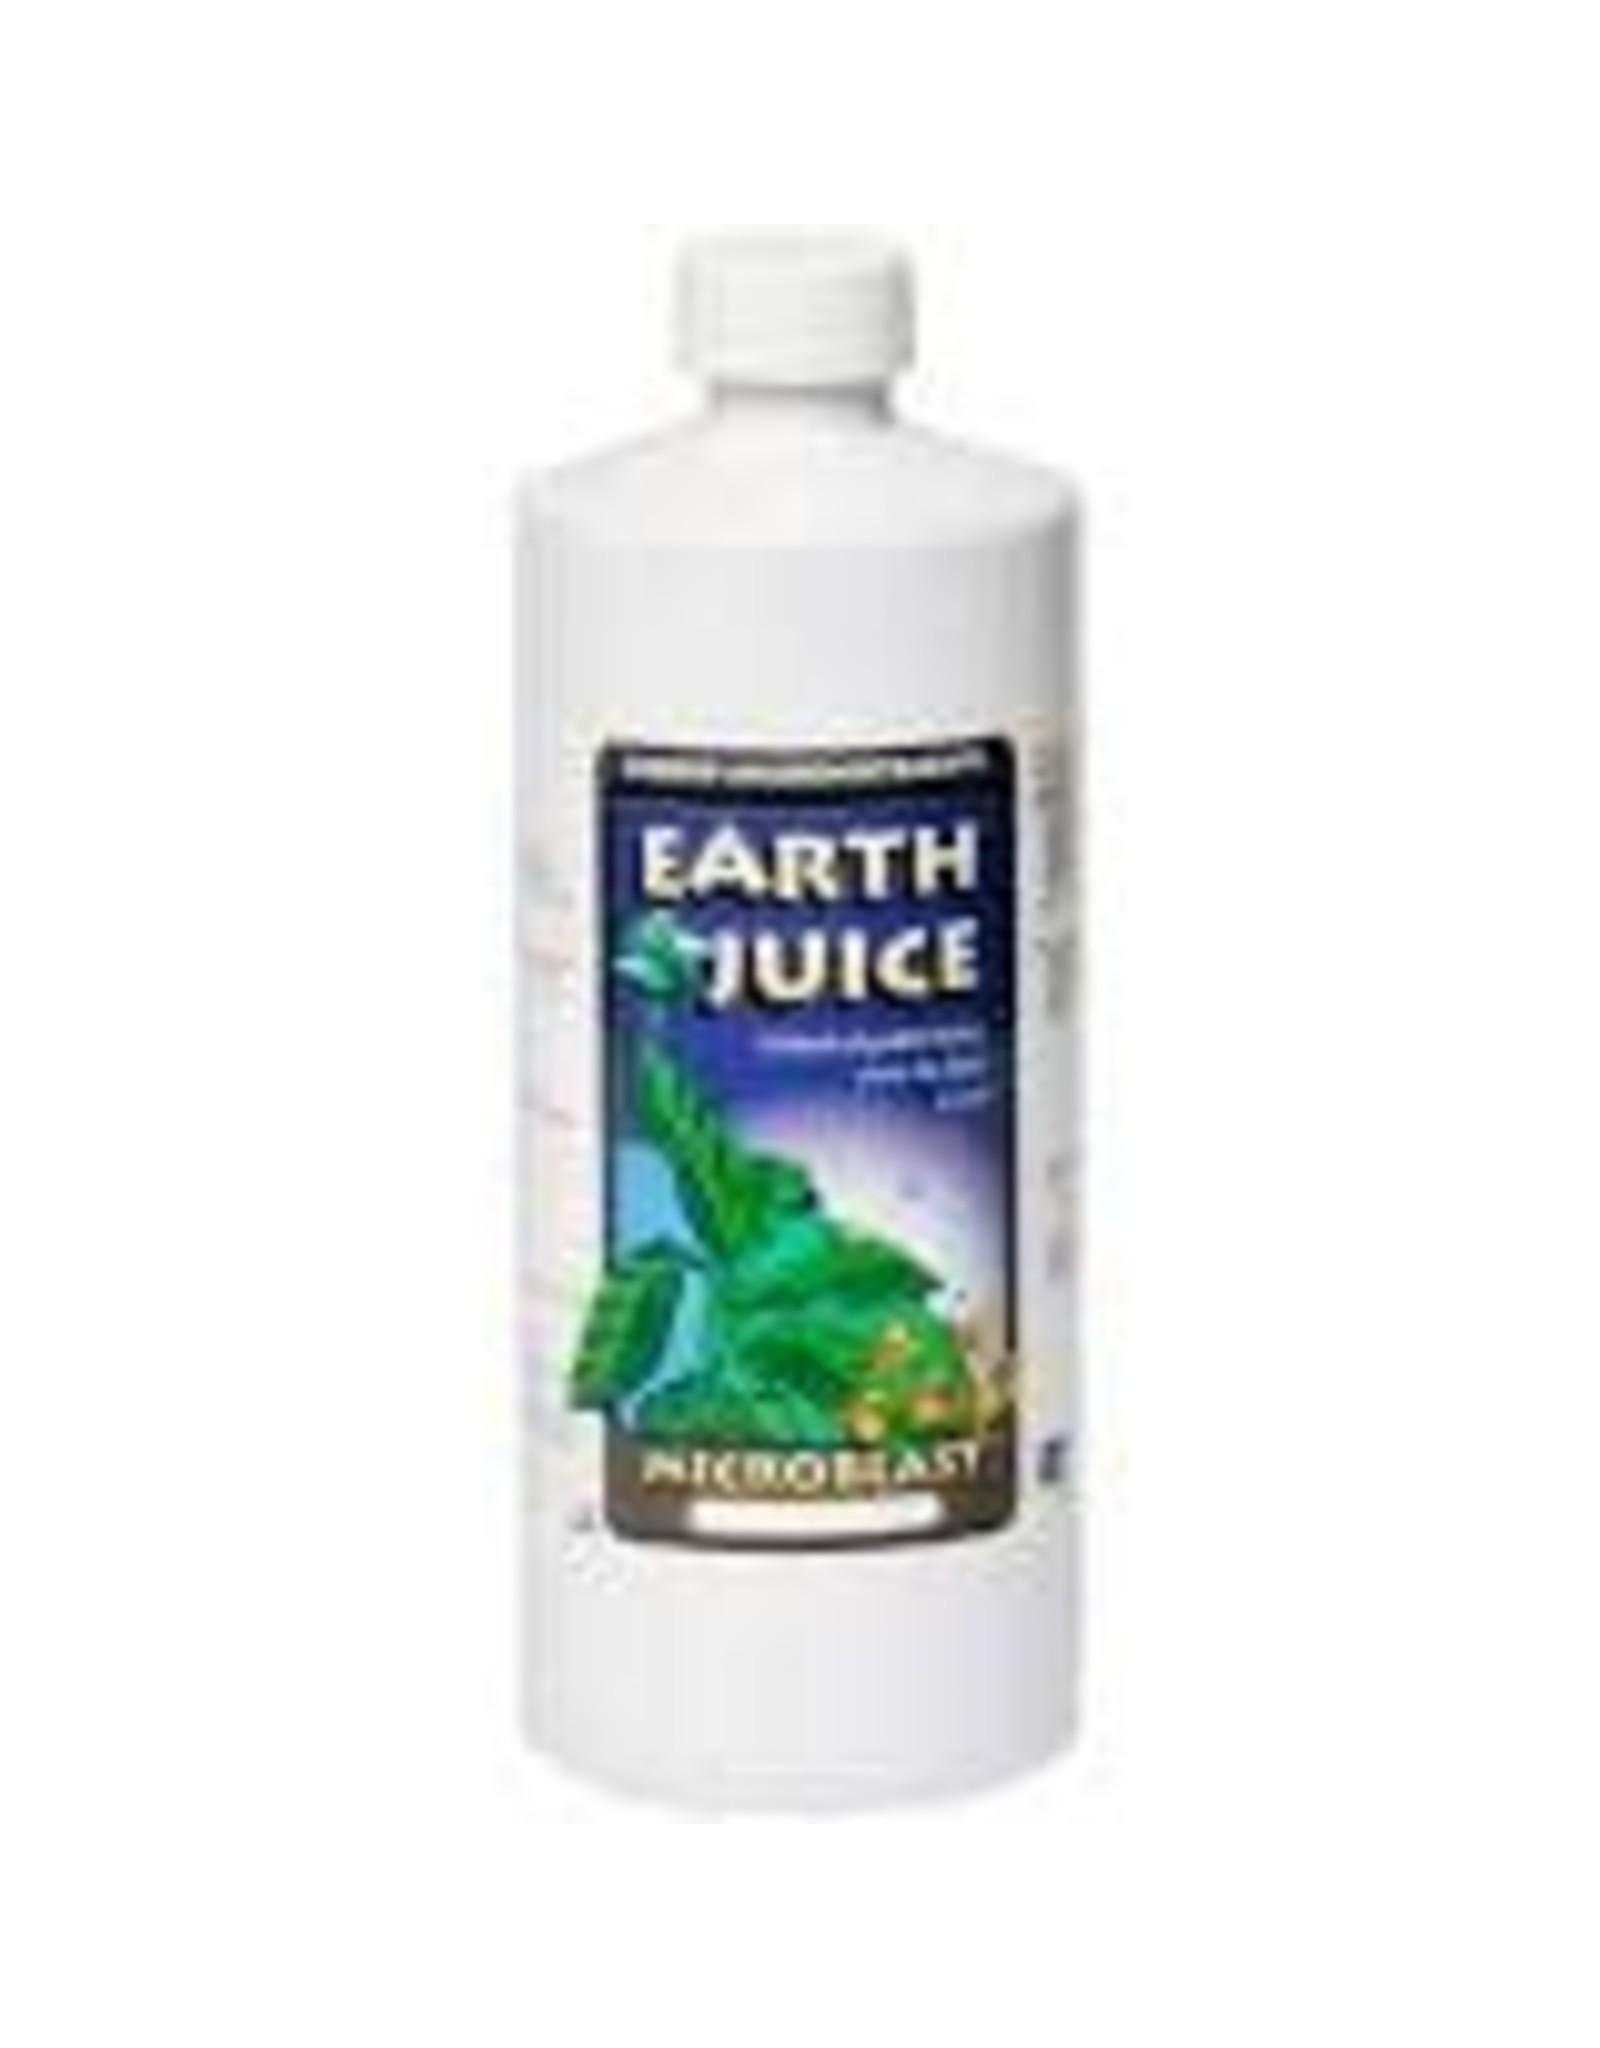 Earth Juice Earth Juice Microblast, 1 qt